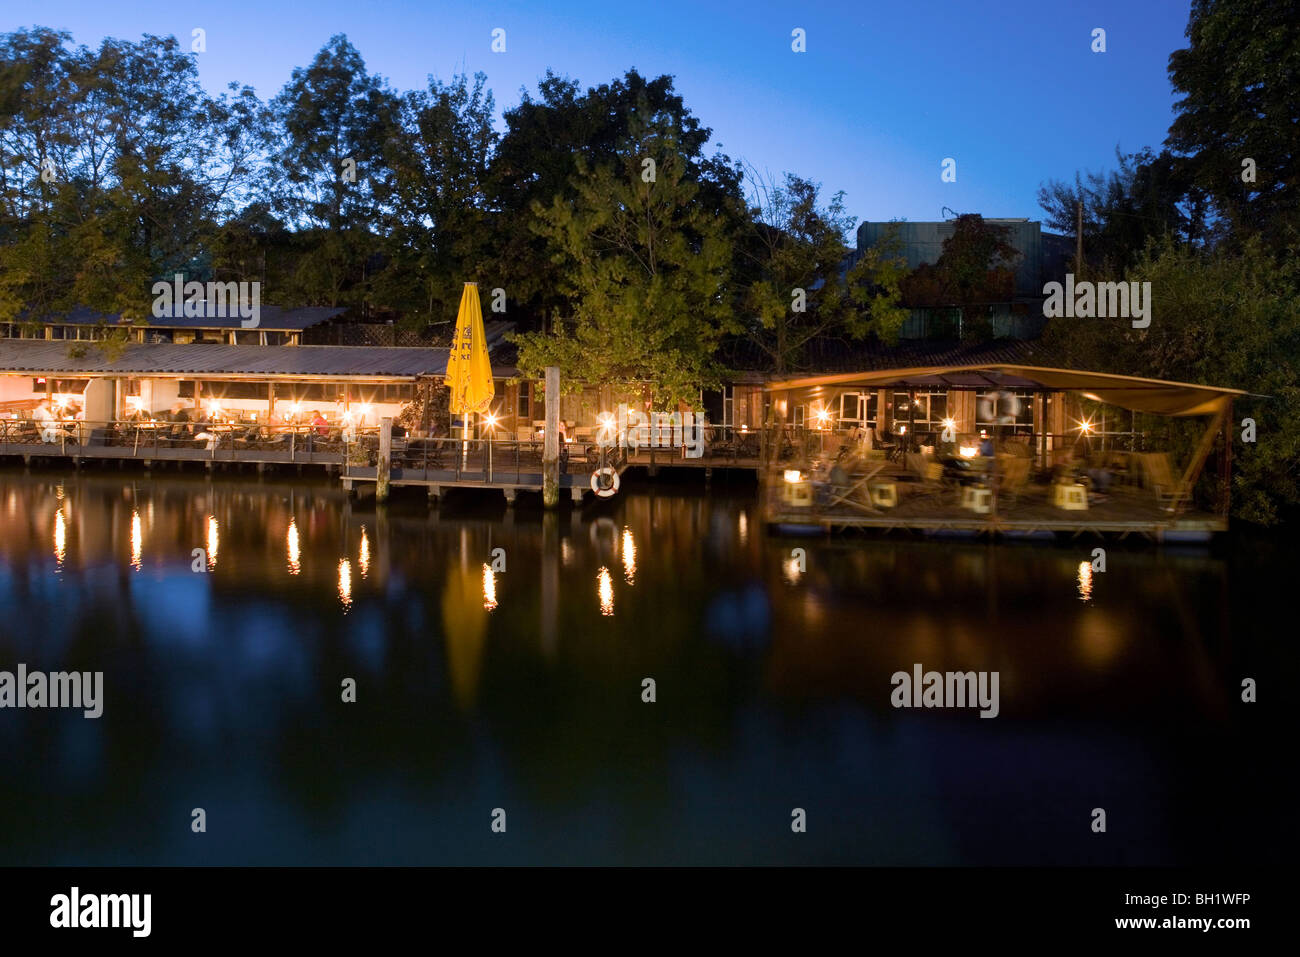 restaurants, cafés, bars at Flutgraben in the evening, canal, Treptow, Berlin, Germany Stock Photo